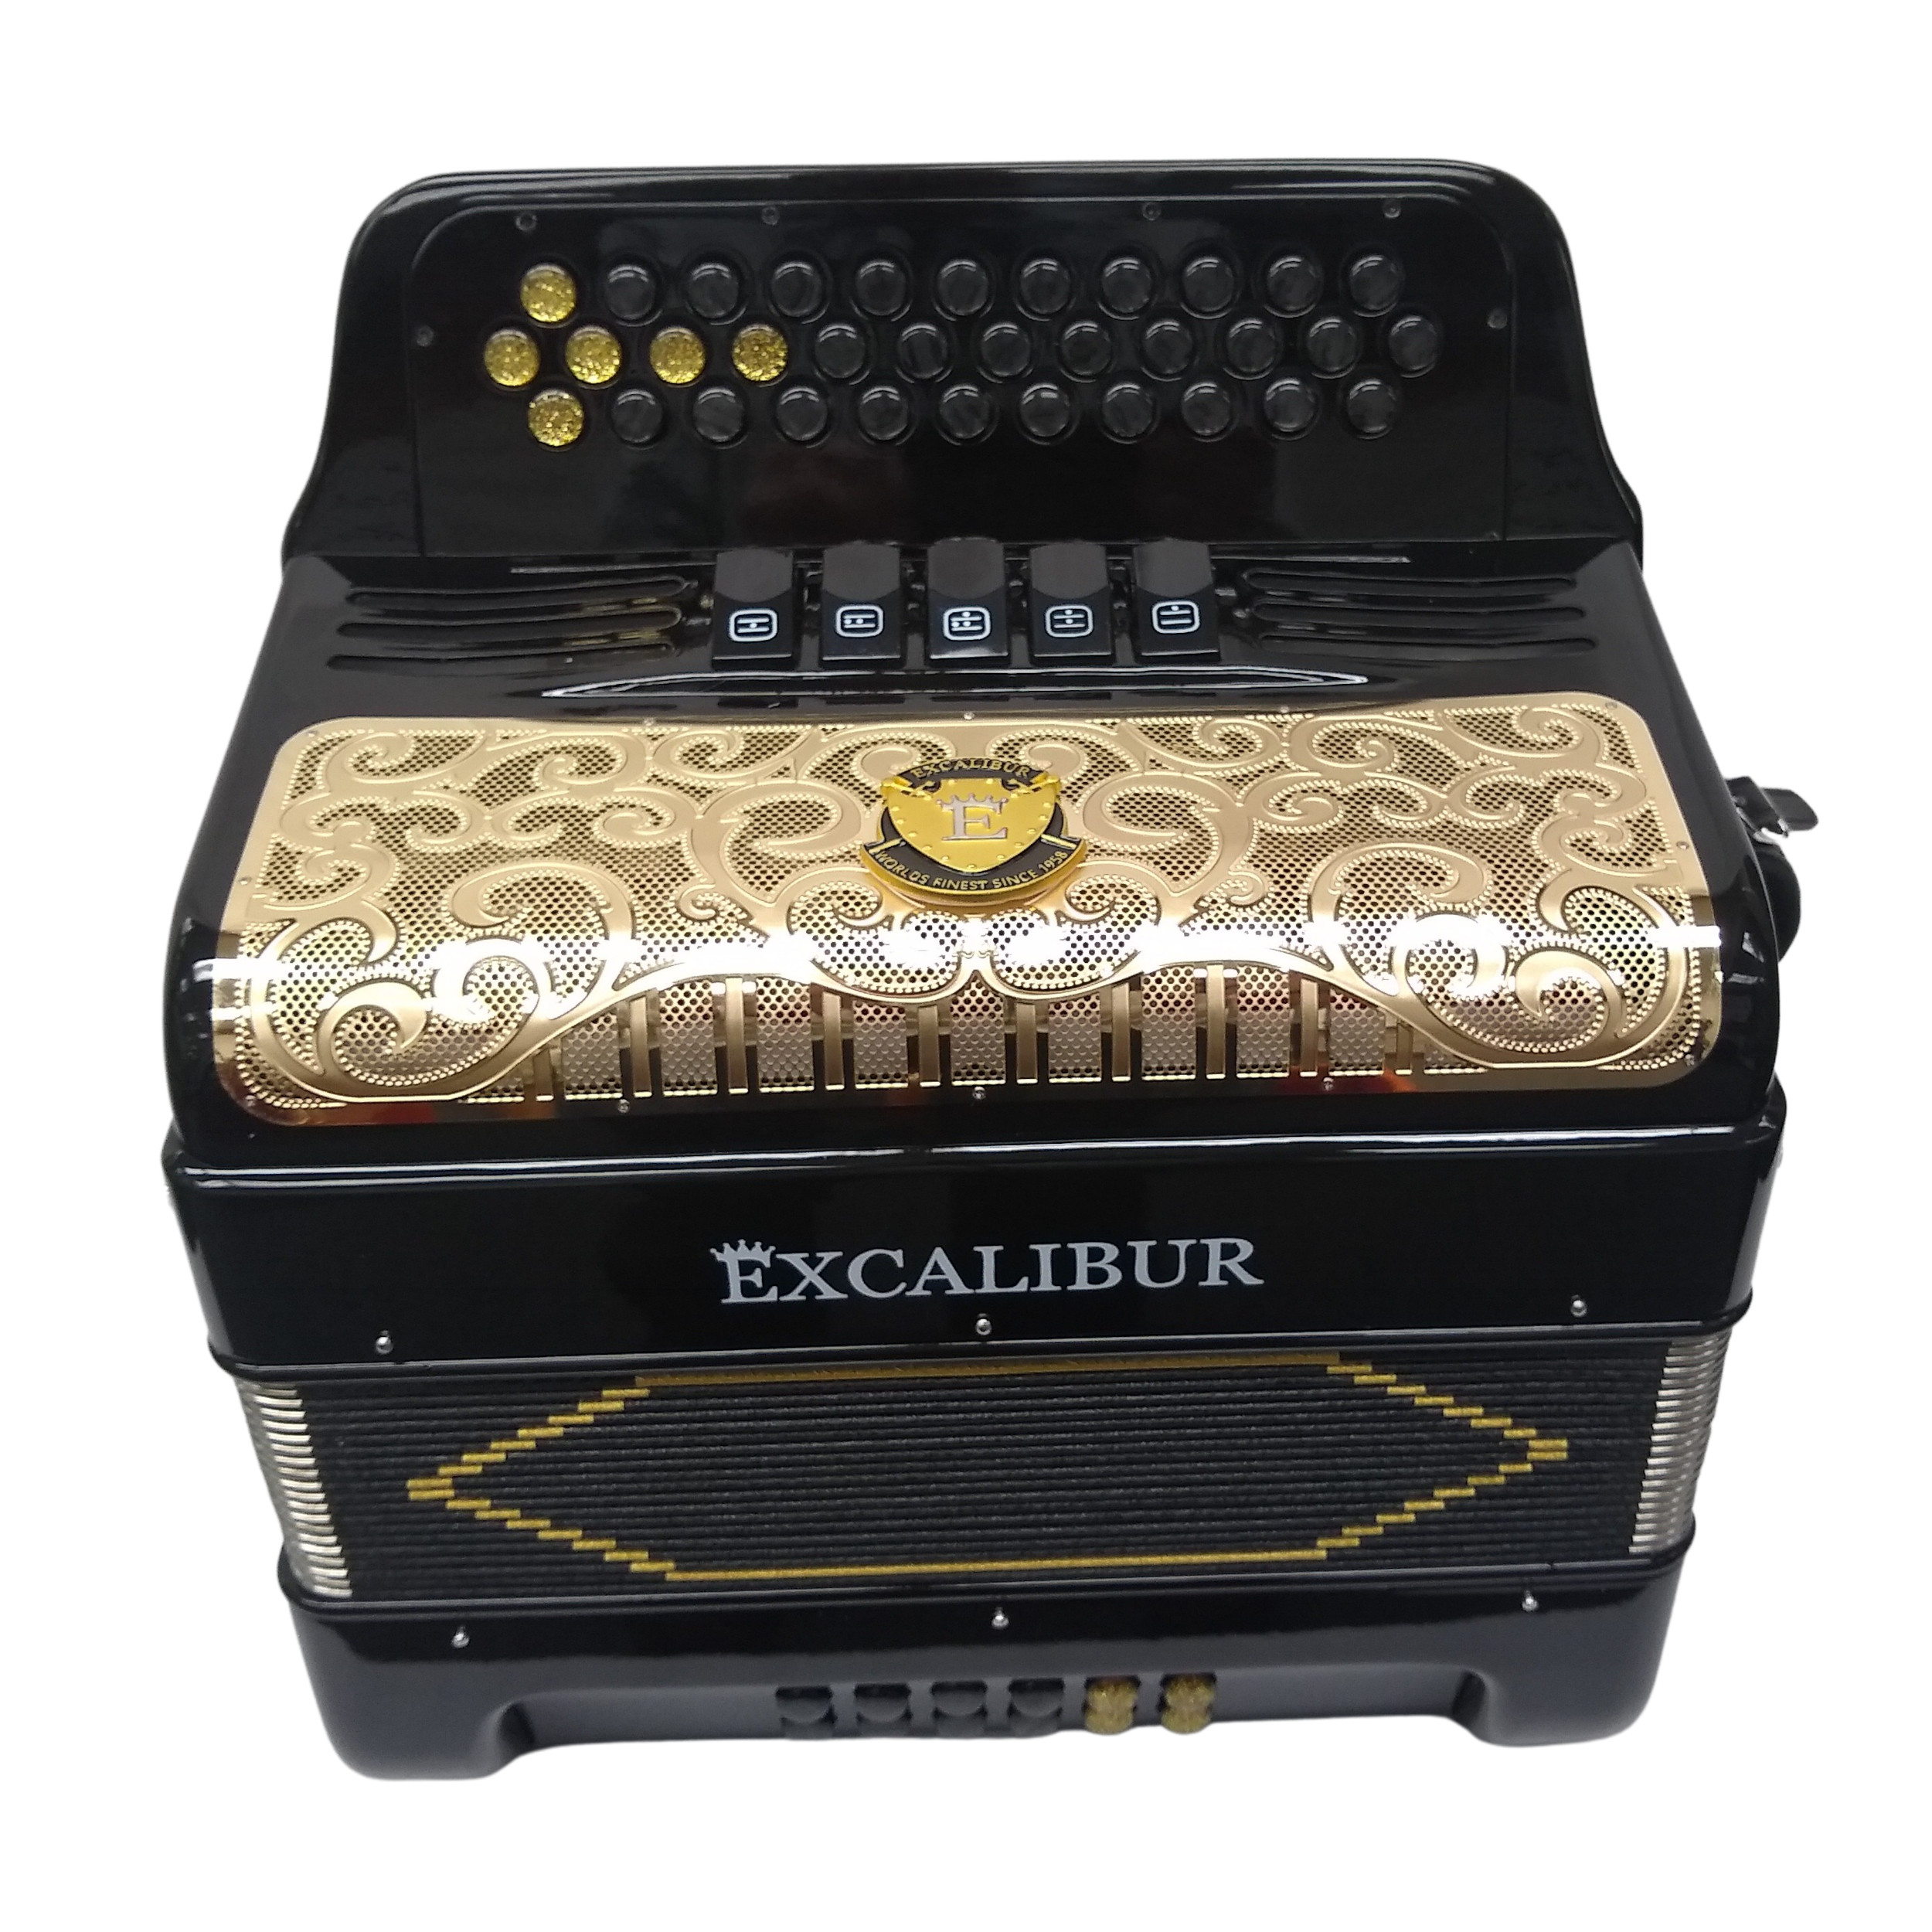 Excalibur Super Classic PSI LTD 5 Switch Button Accordion - Black